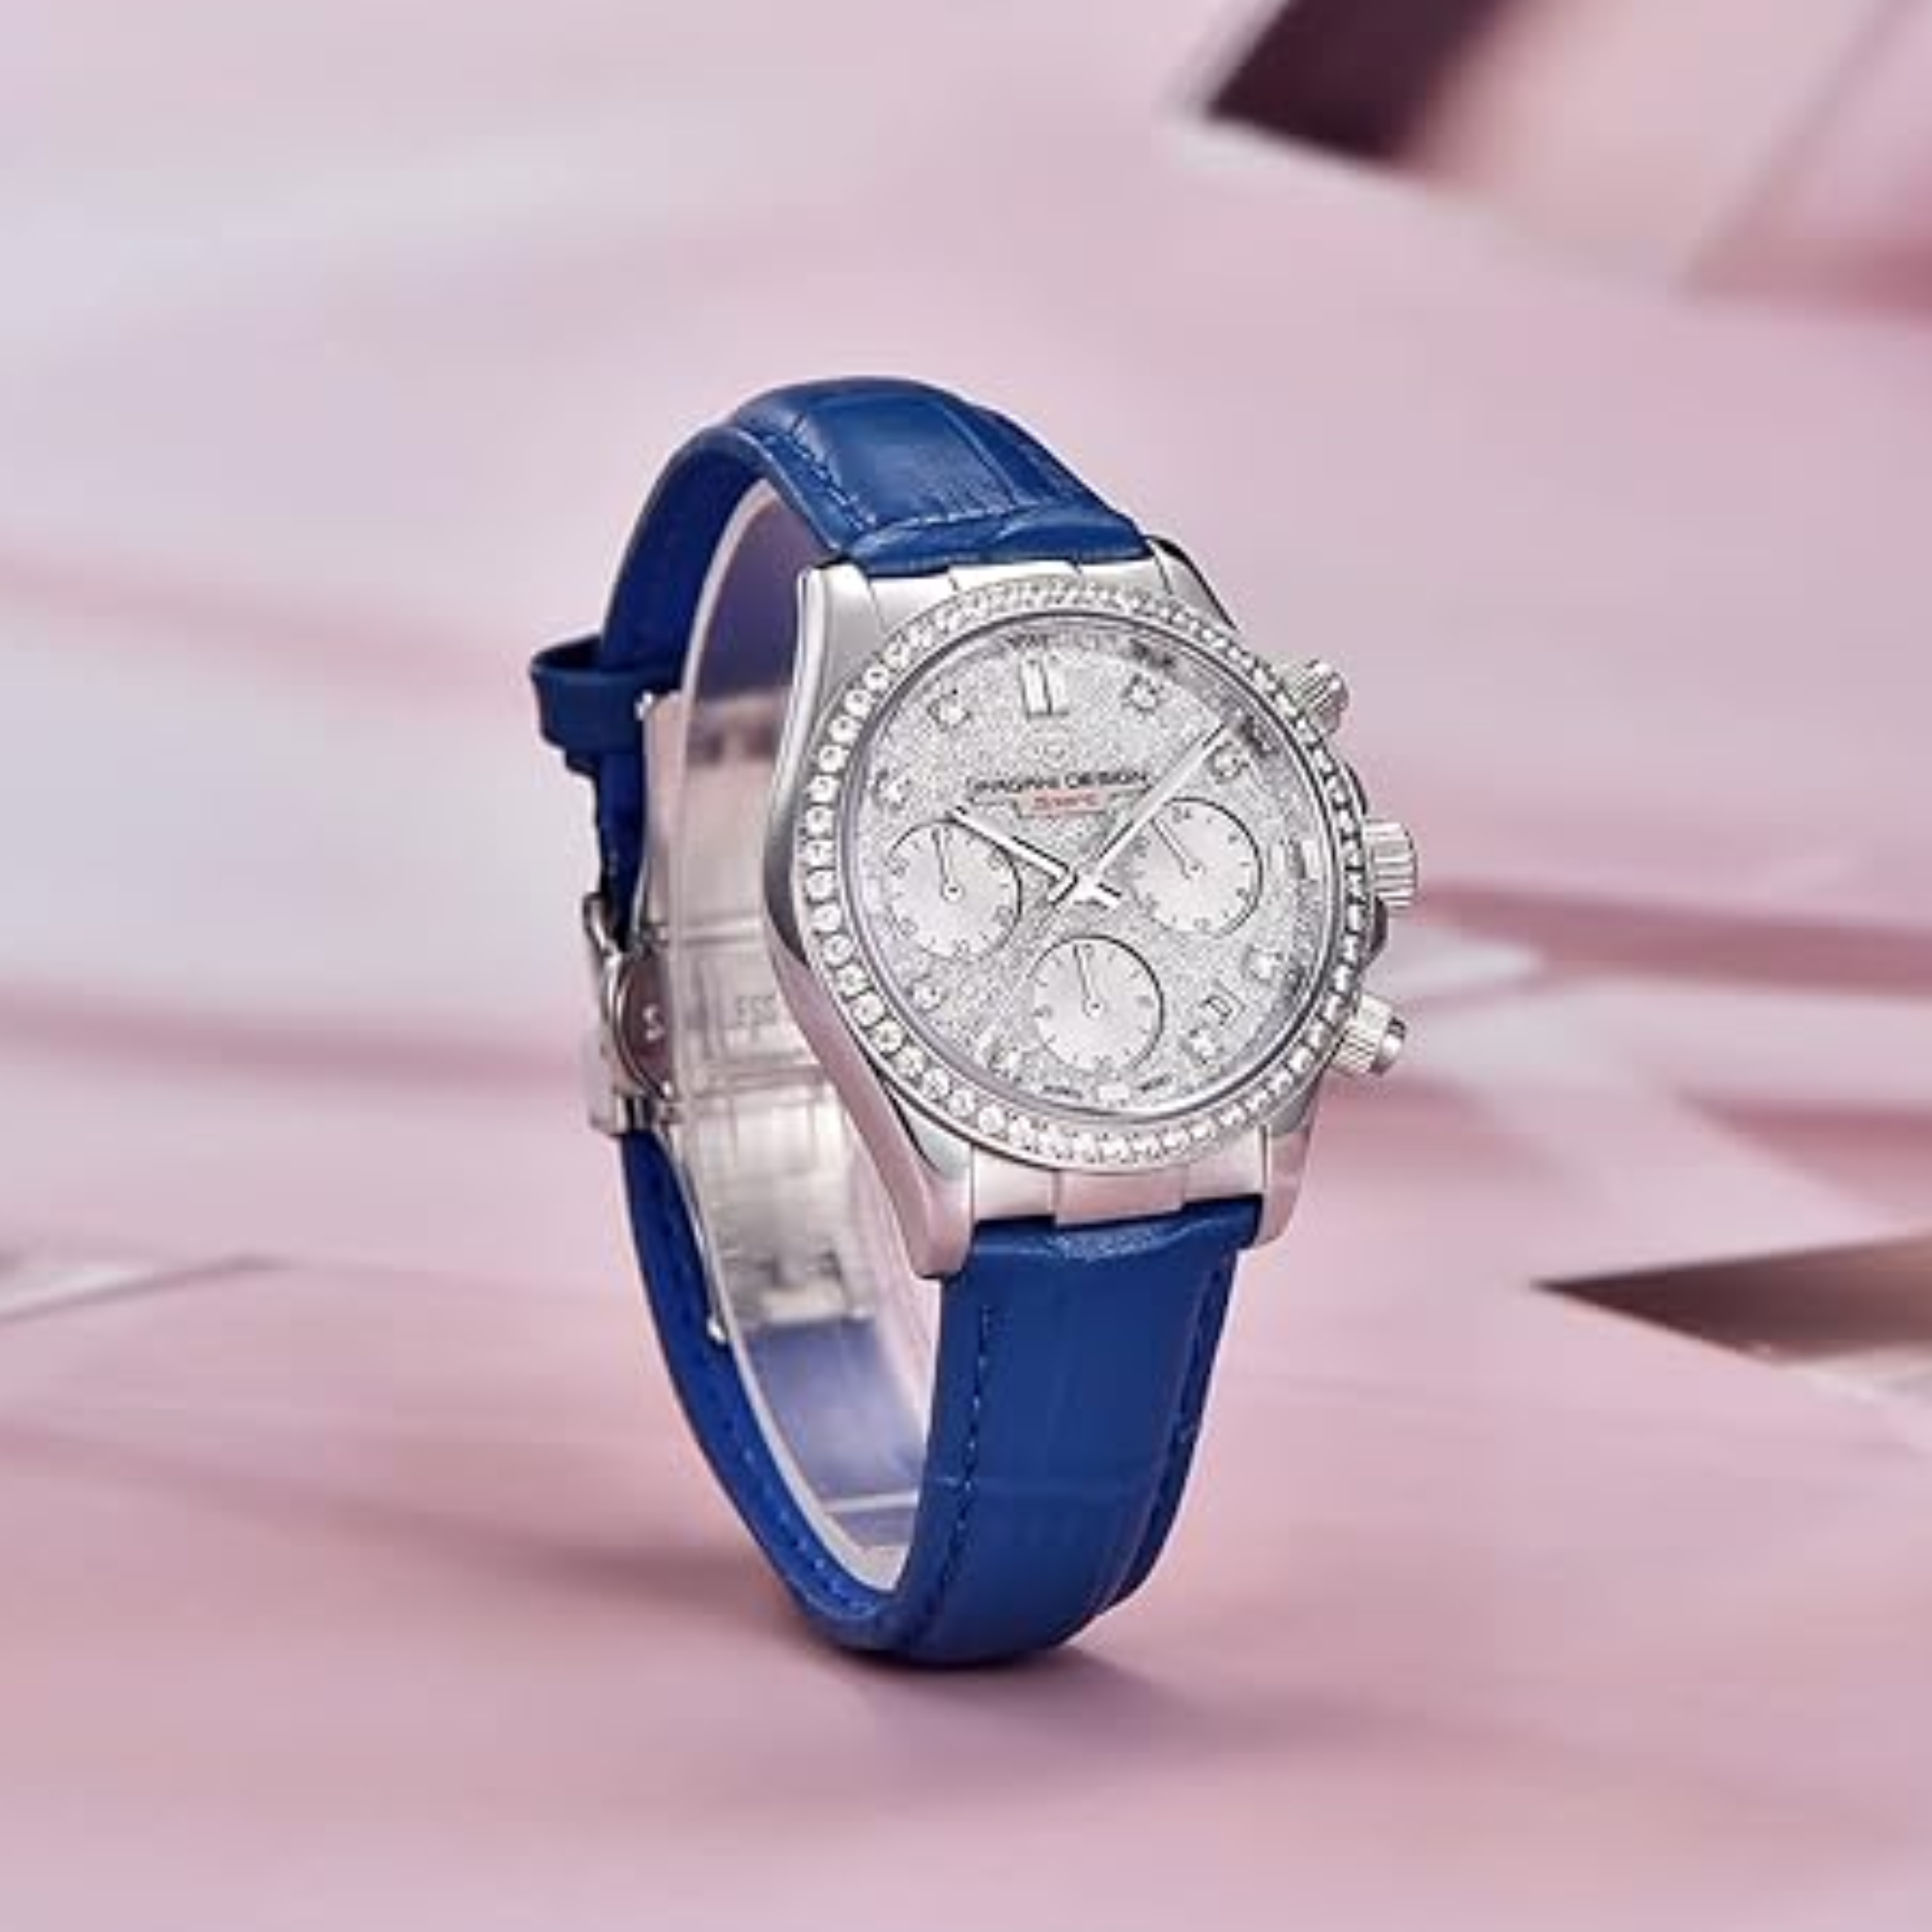 Pagani Design PD1730 Chronograph Date Quartz women's Watch - White Dial with Blue Strap